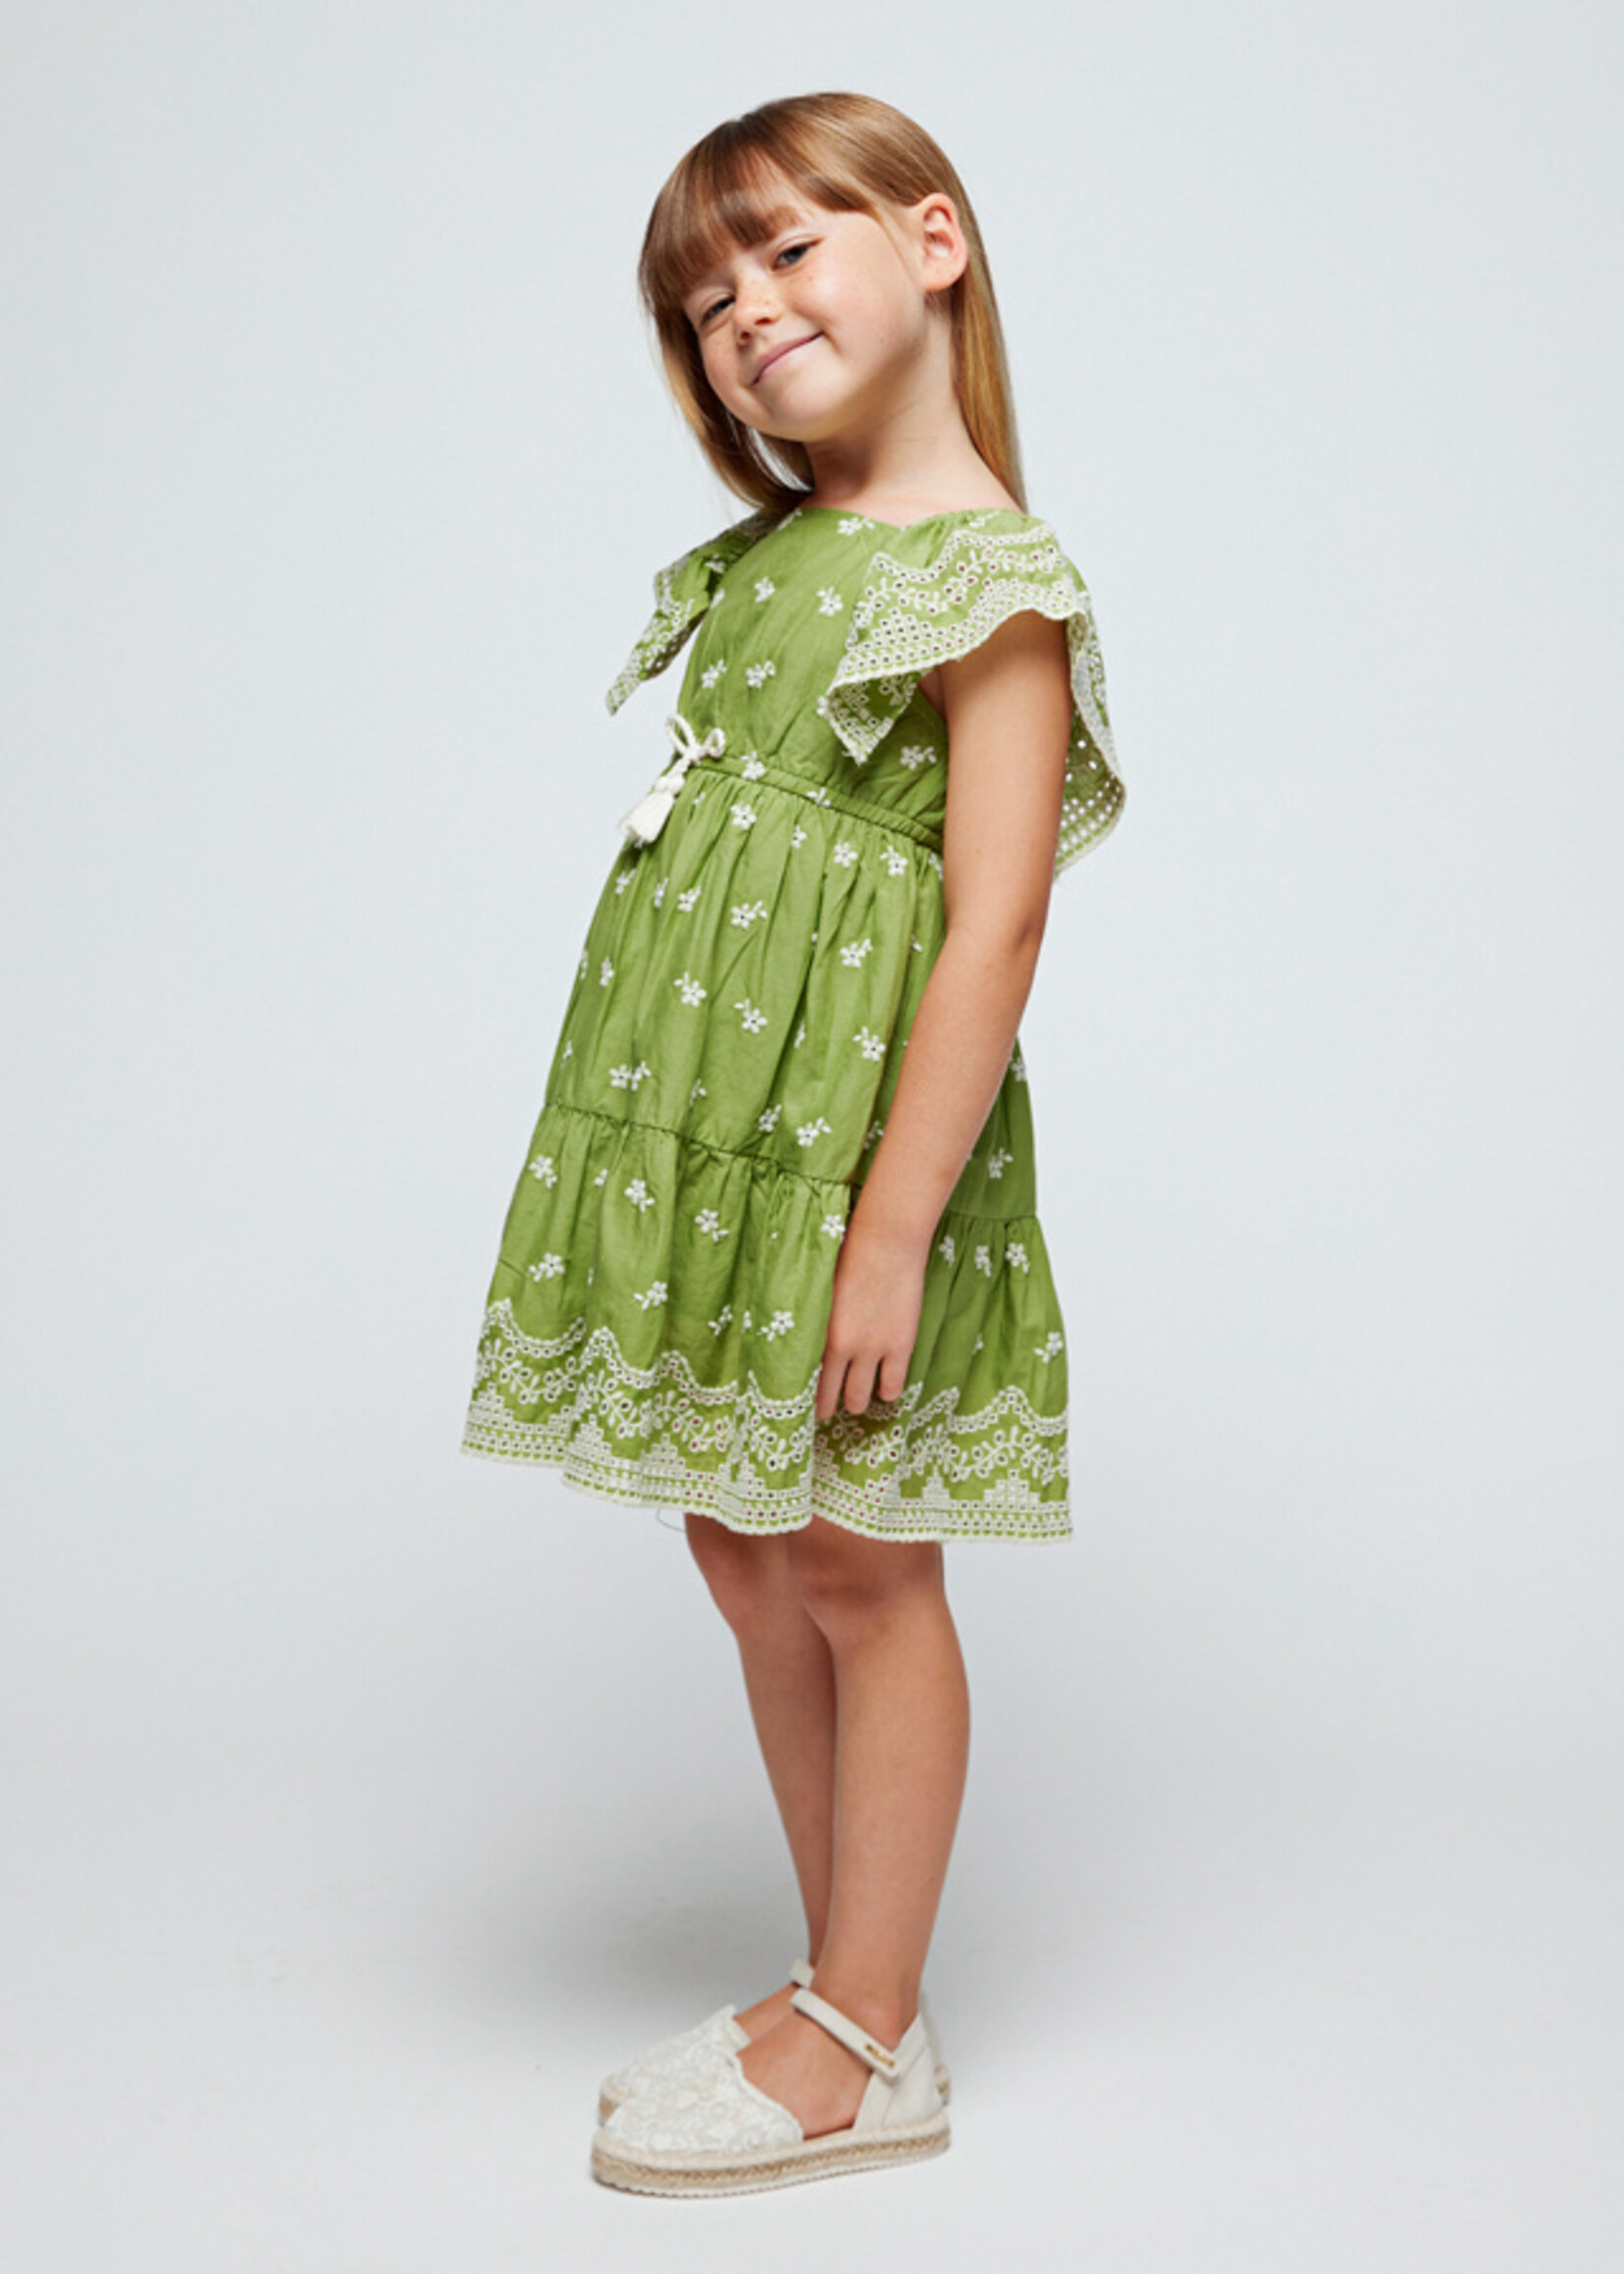 Mayoral Mini Girl            3933 Embroidered dress             Apple